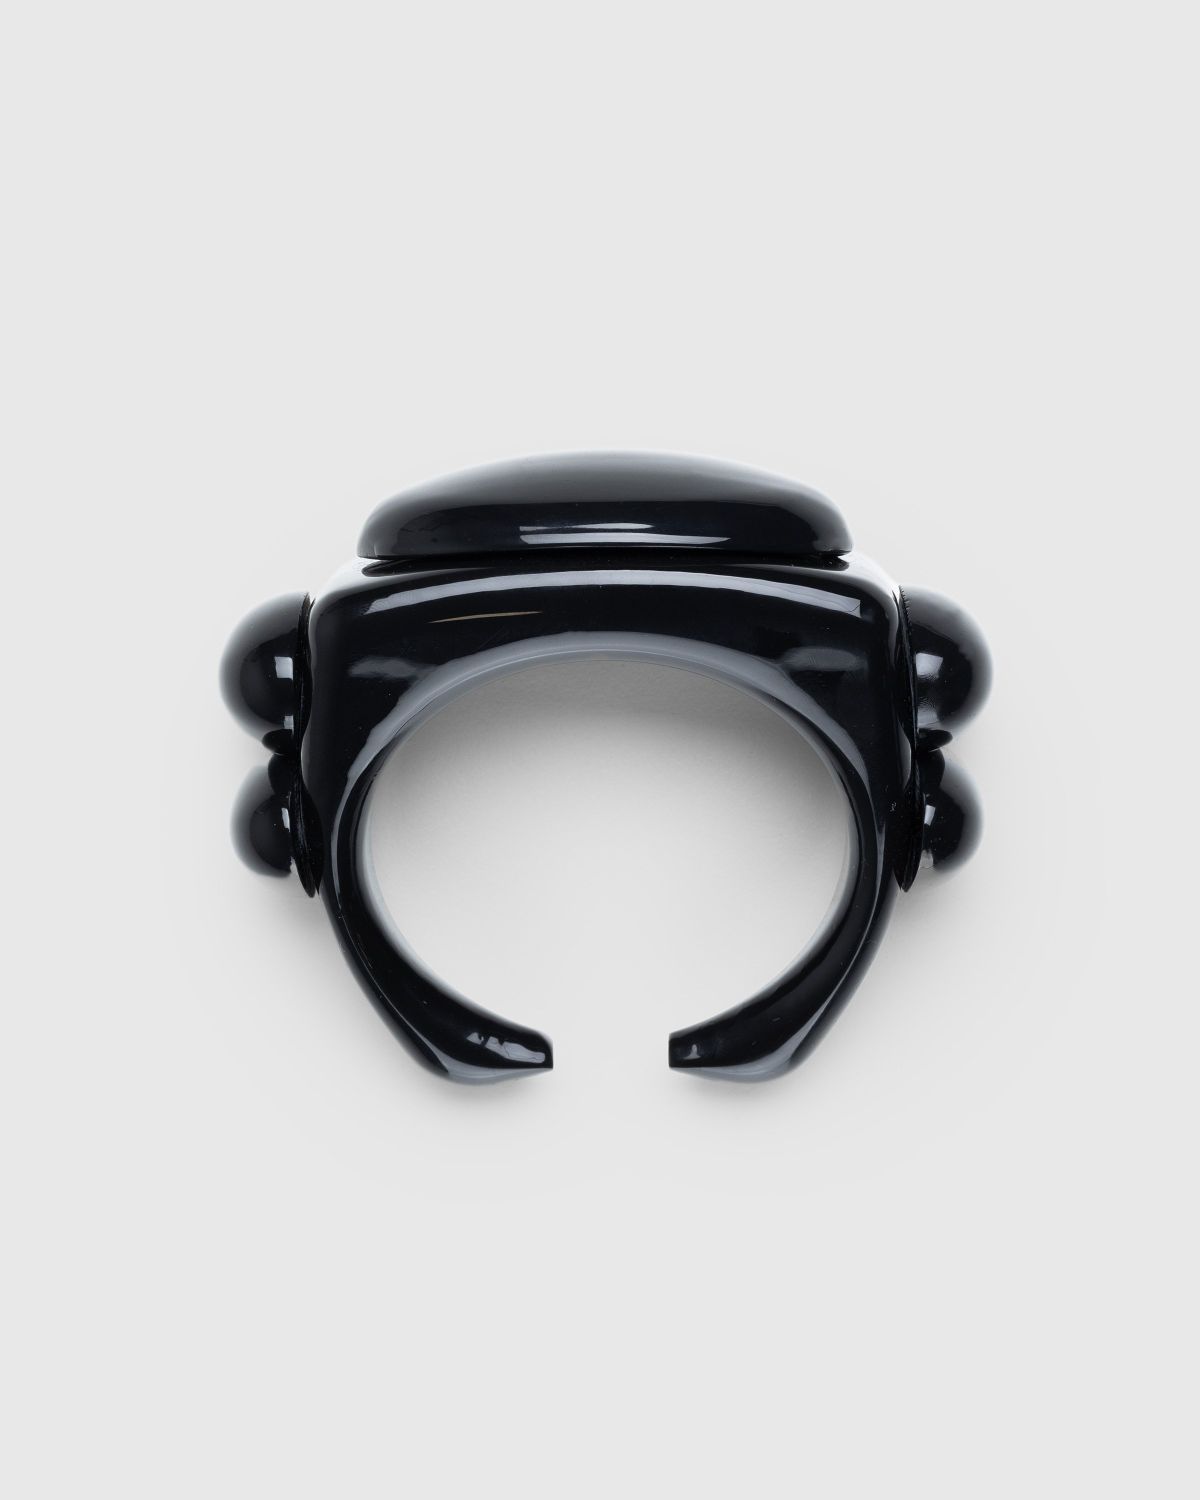 Jean Paul Gaultier – Shiny Square Bracelet Black - Jewelry - Black - Image 2